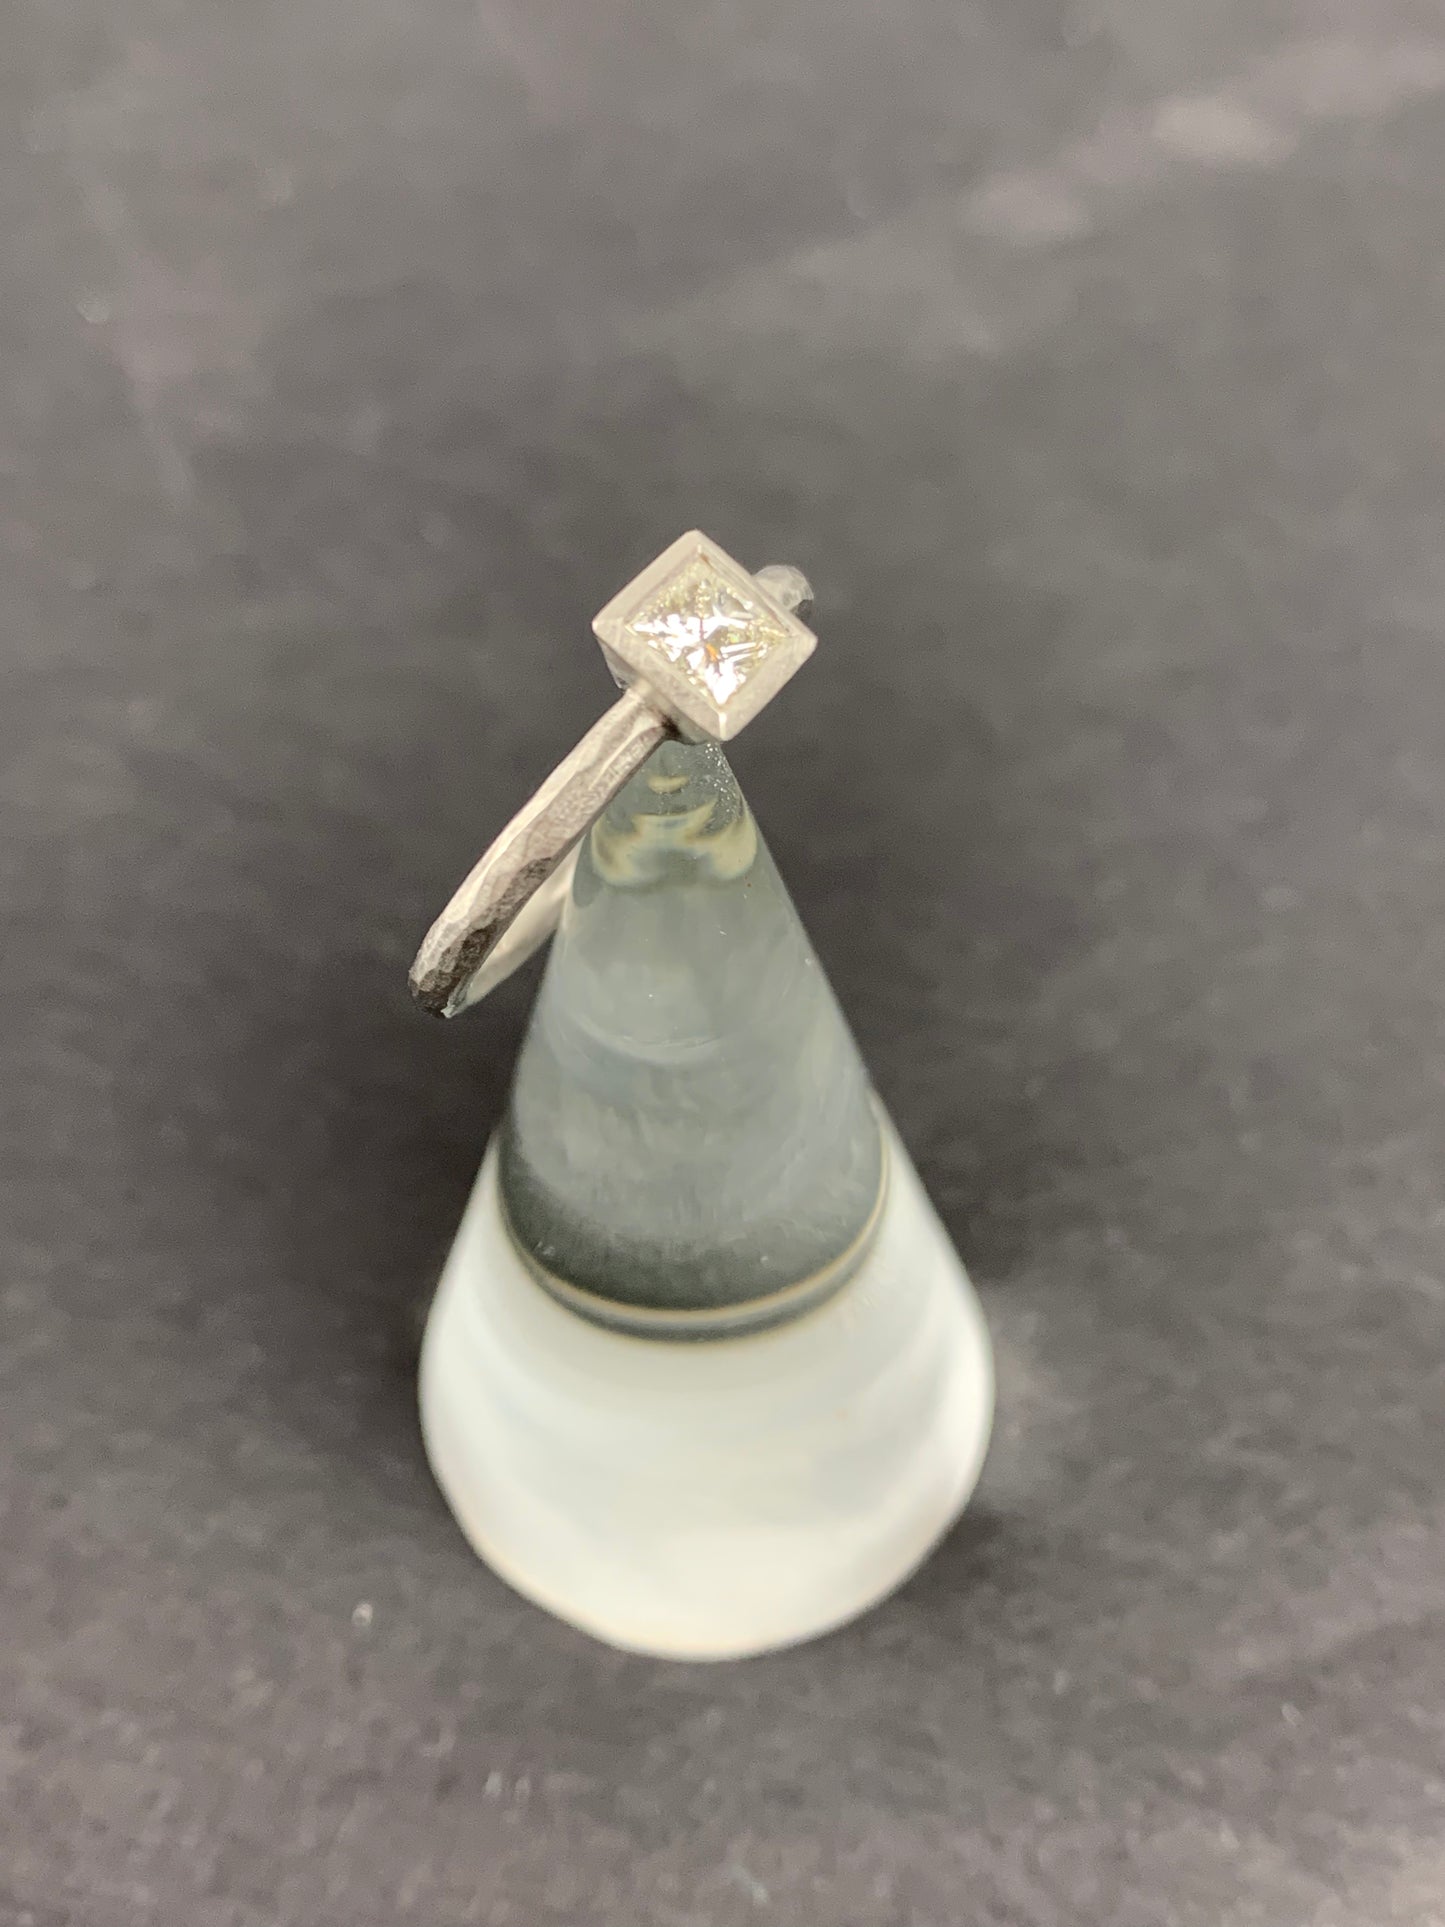 Betts, Malcolm - Platinum Ring with Princess Cut Diamond, Size L